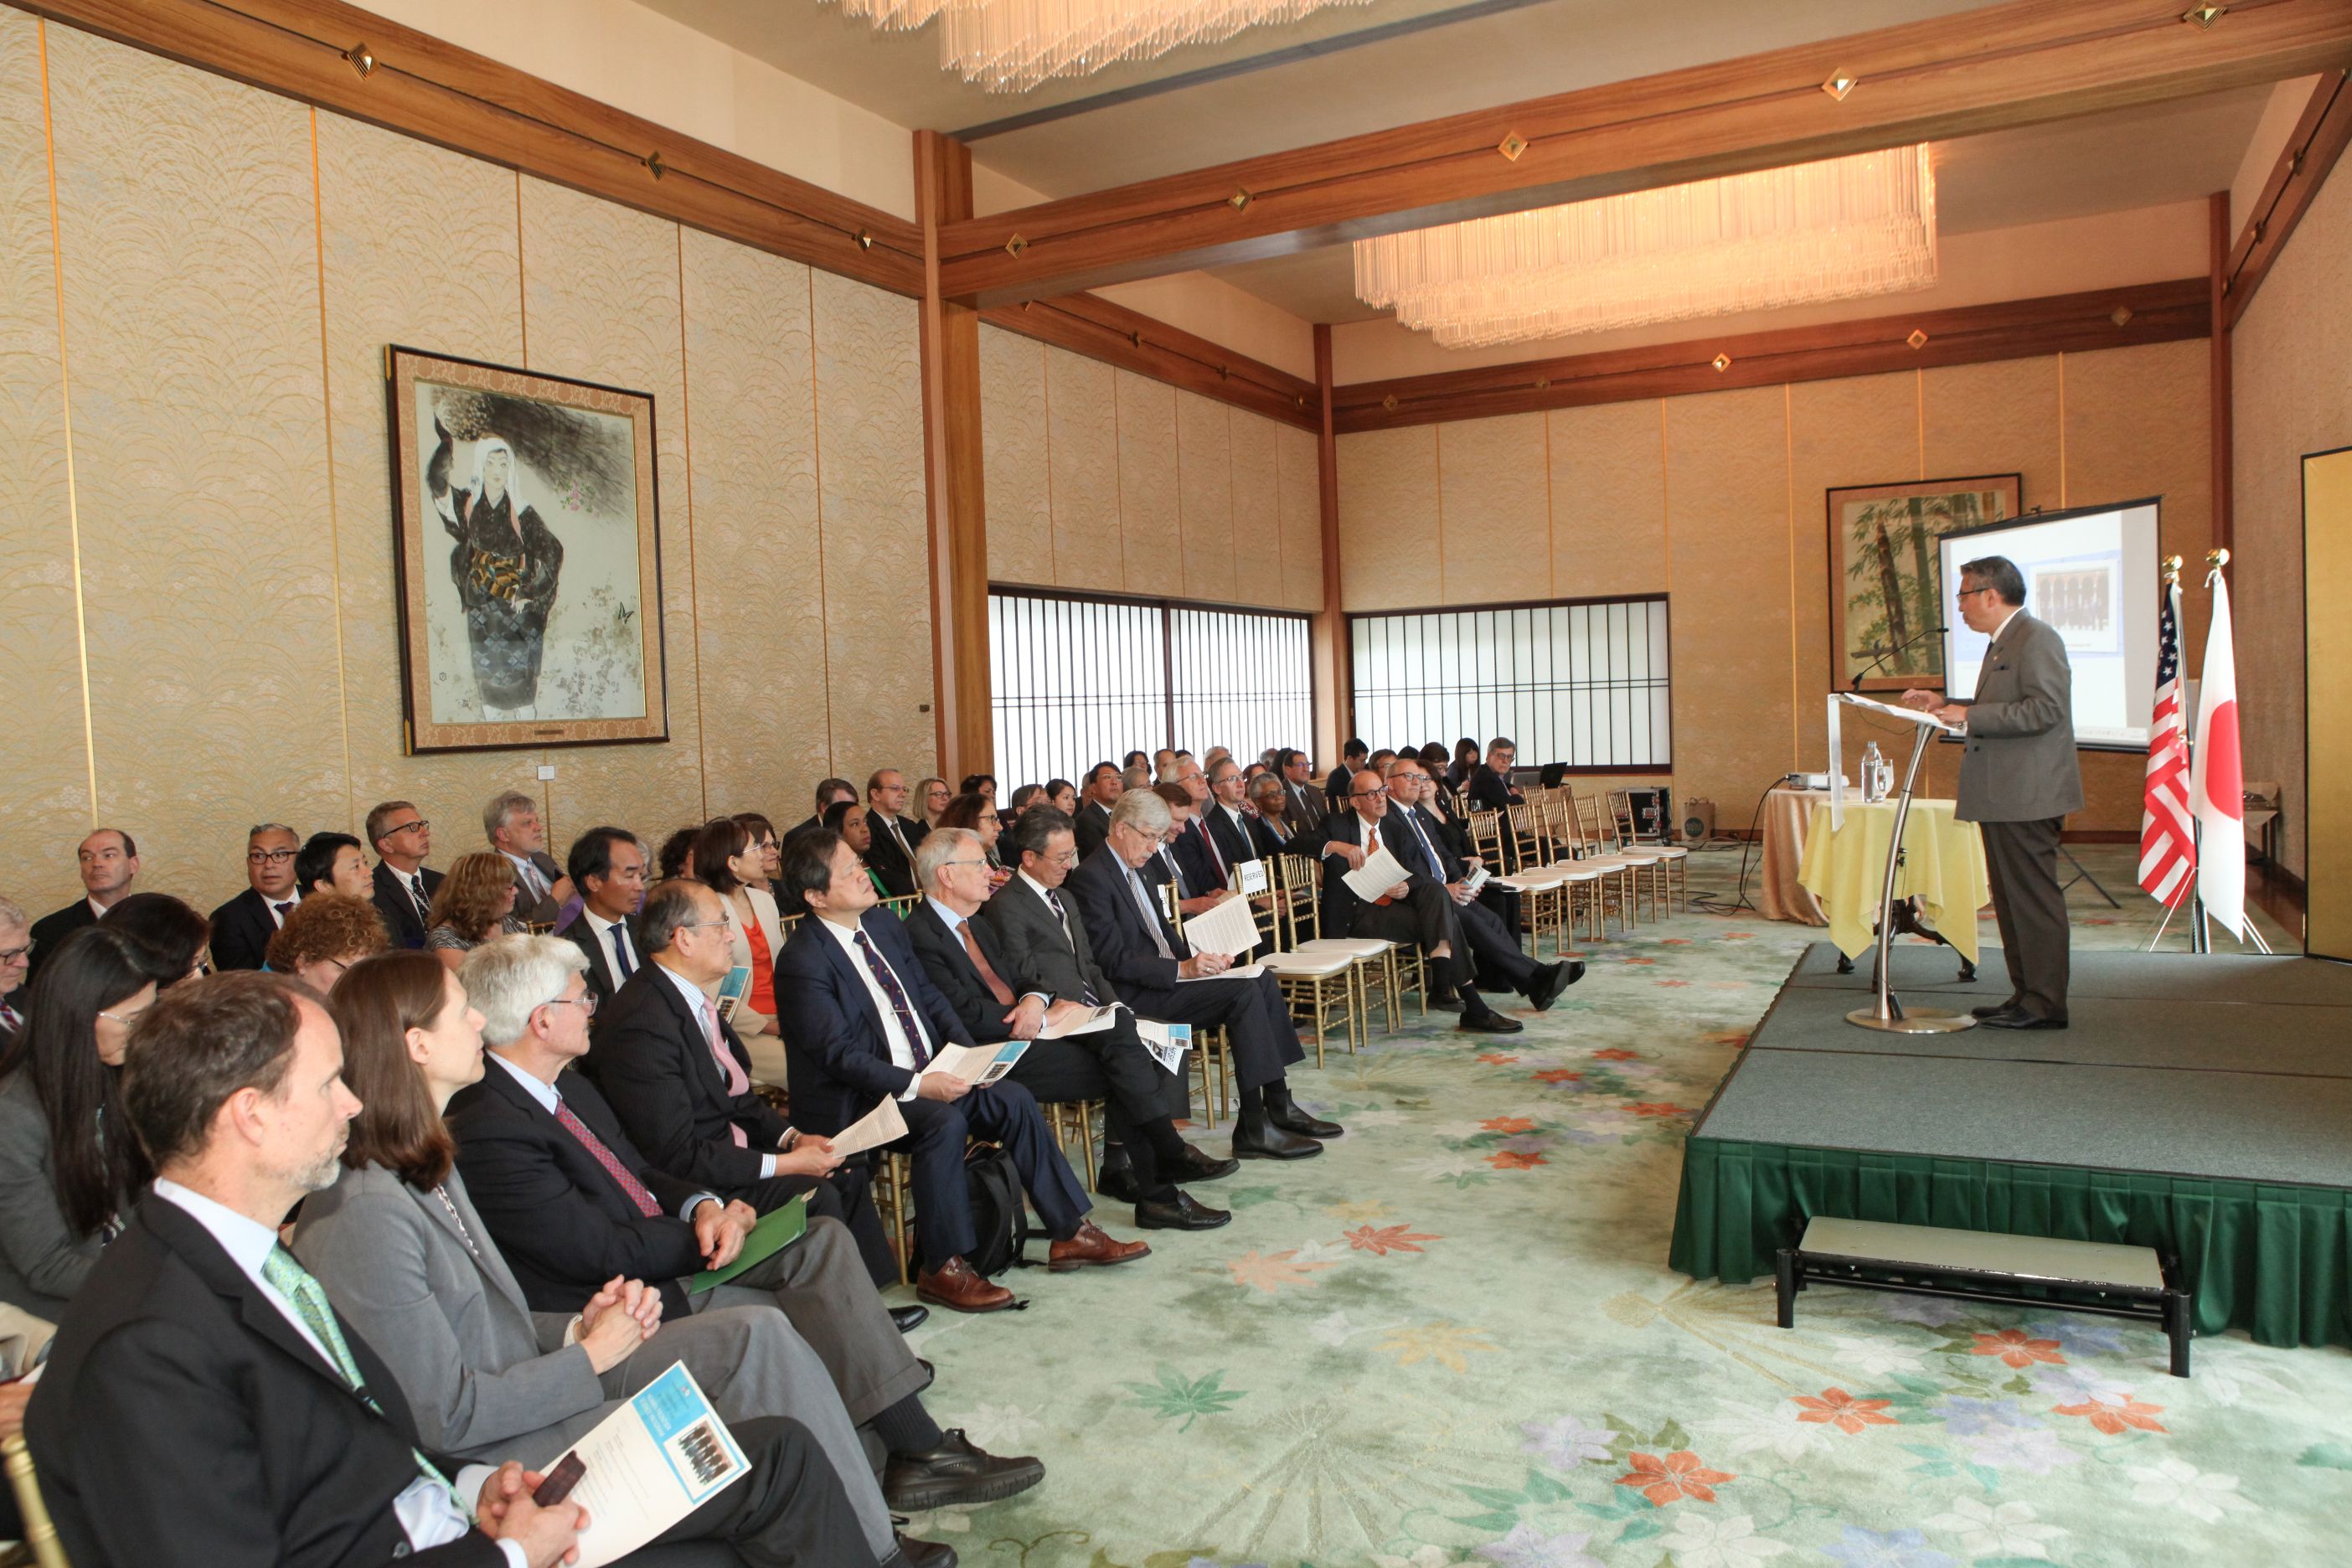 Opening Remarks by Mr. Shinsuke J. Sugiyama, Ambassador Extraordinary of Japan to the United States of America